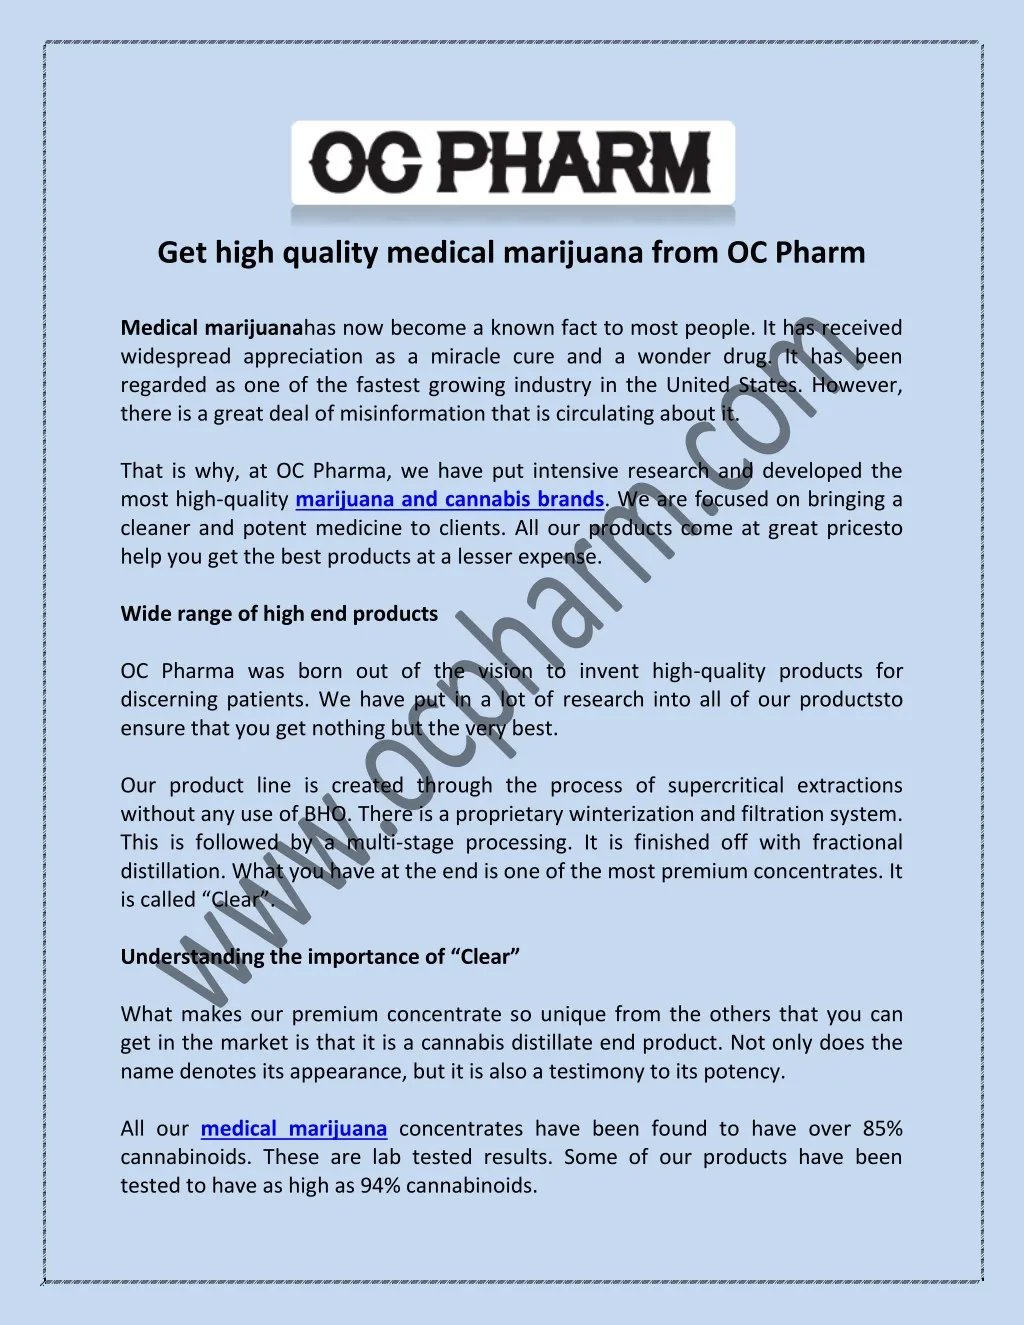 get high quality medical marijuana from oc pharm